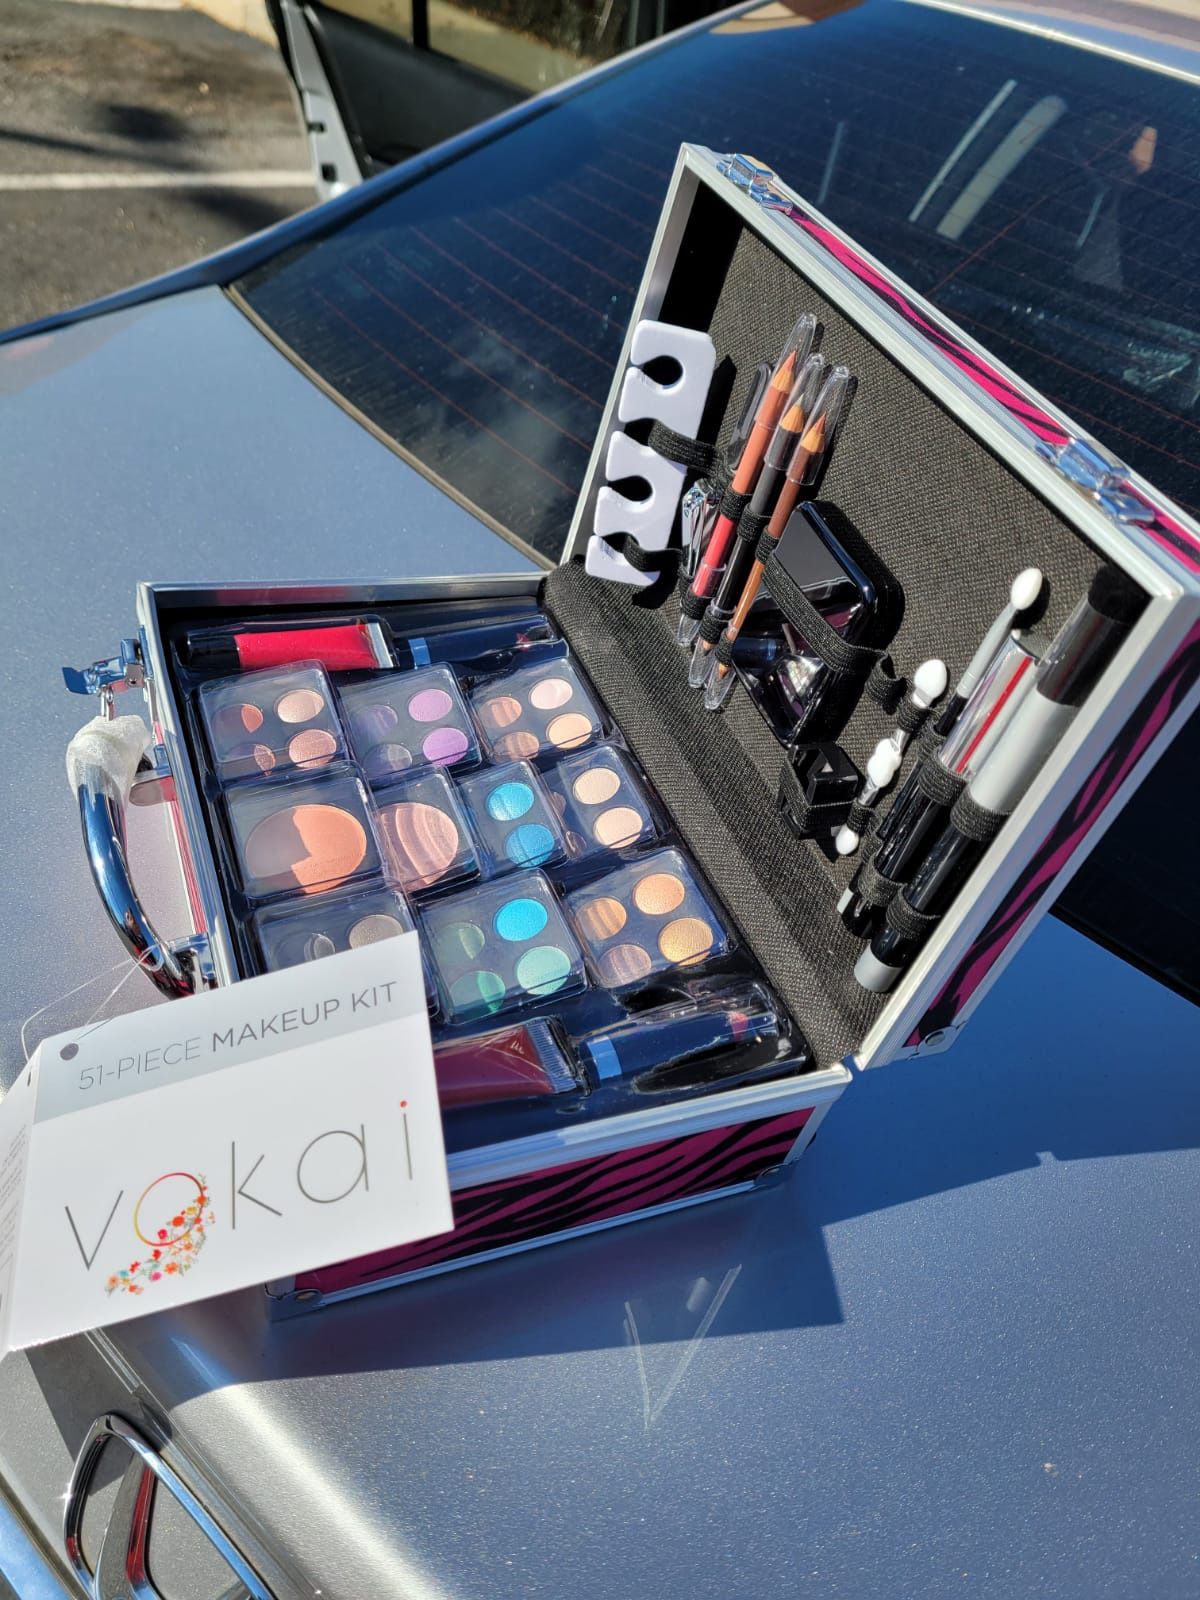 51 Pieces Makeup Kit Vokai For Women 